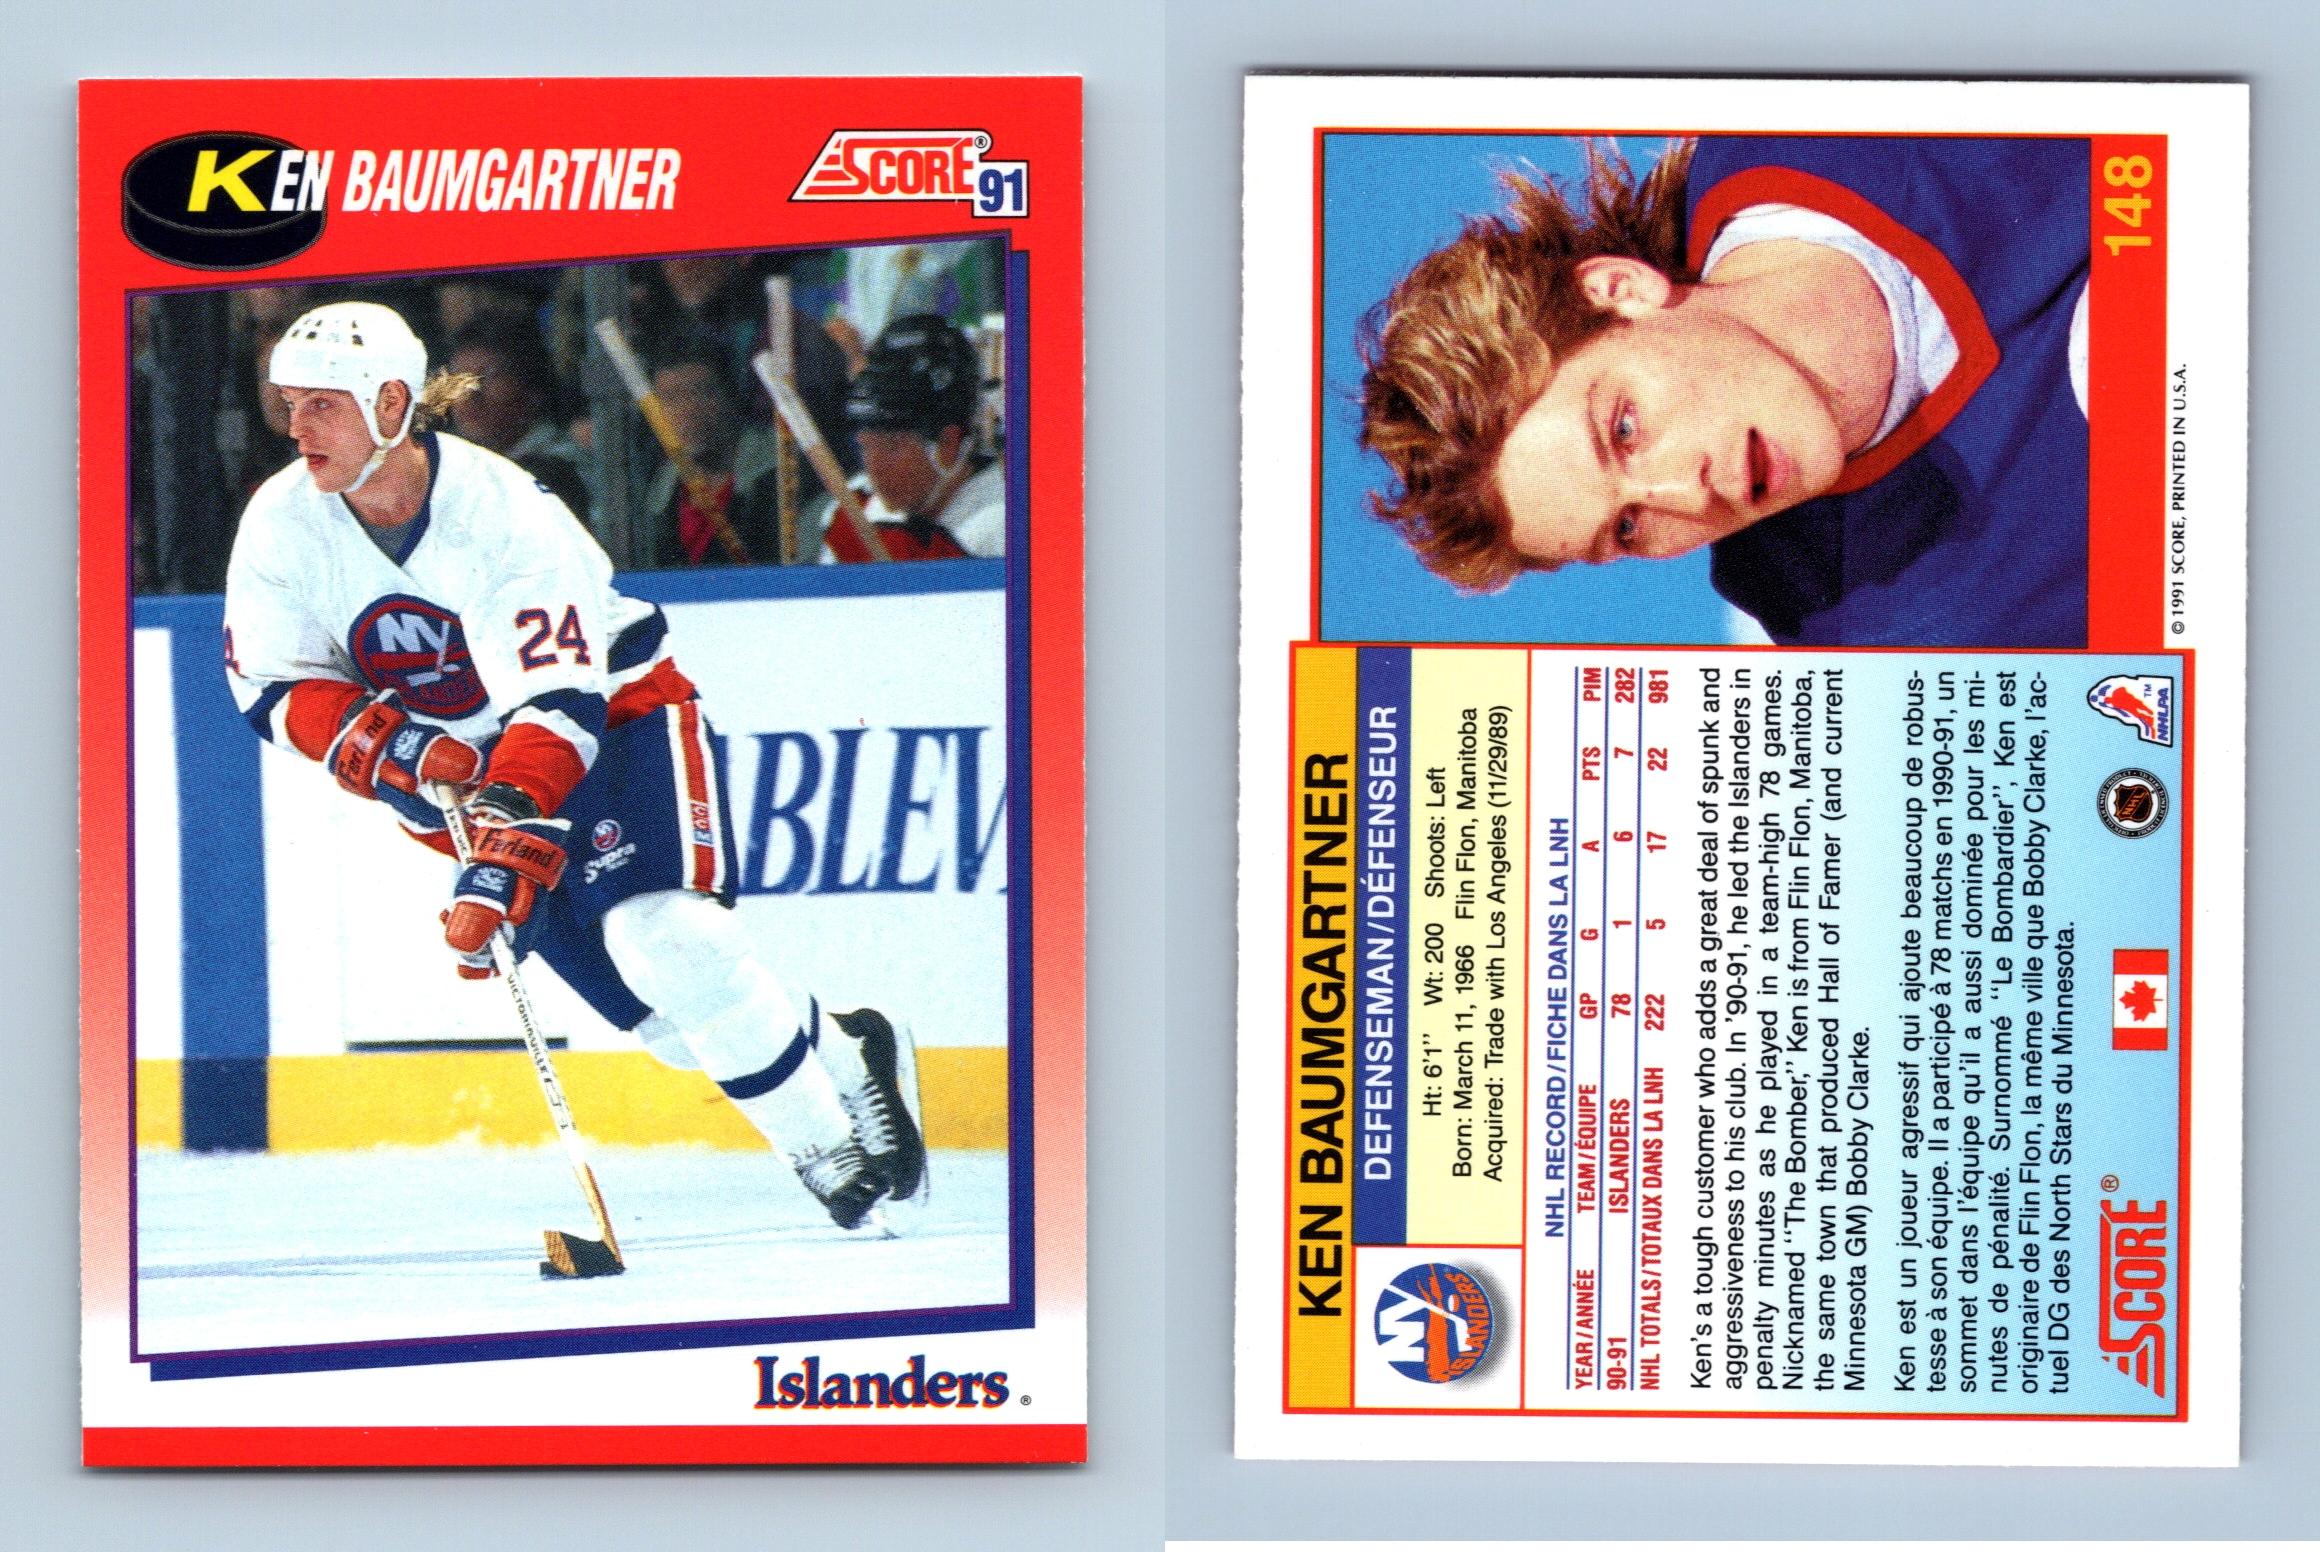 Brian & Joe Mullen #269 Score 1991-2 Bilingual NHL Brothers NHL